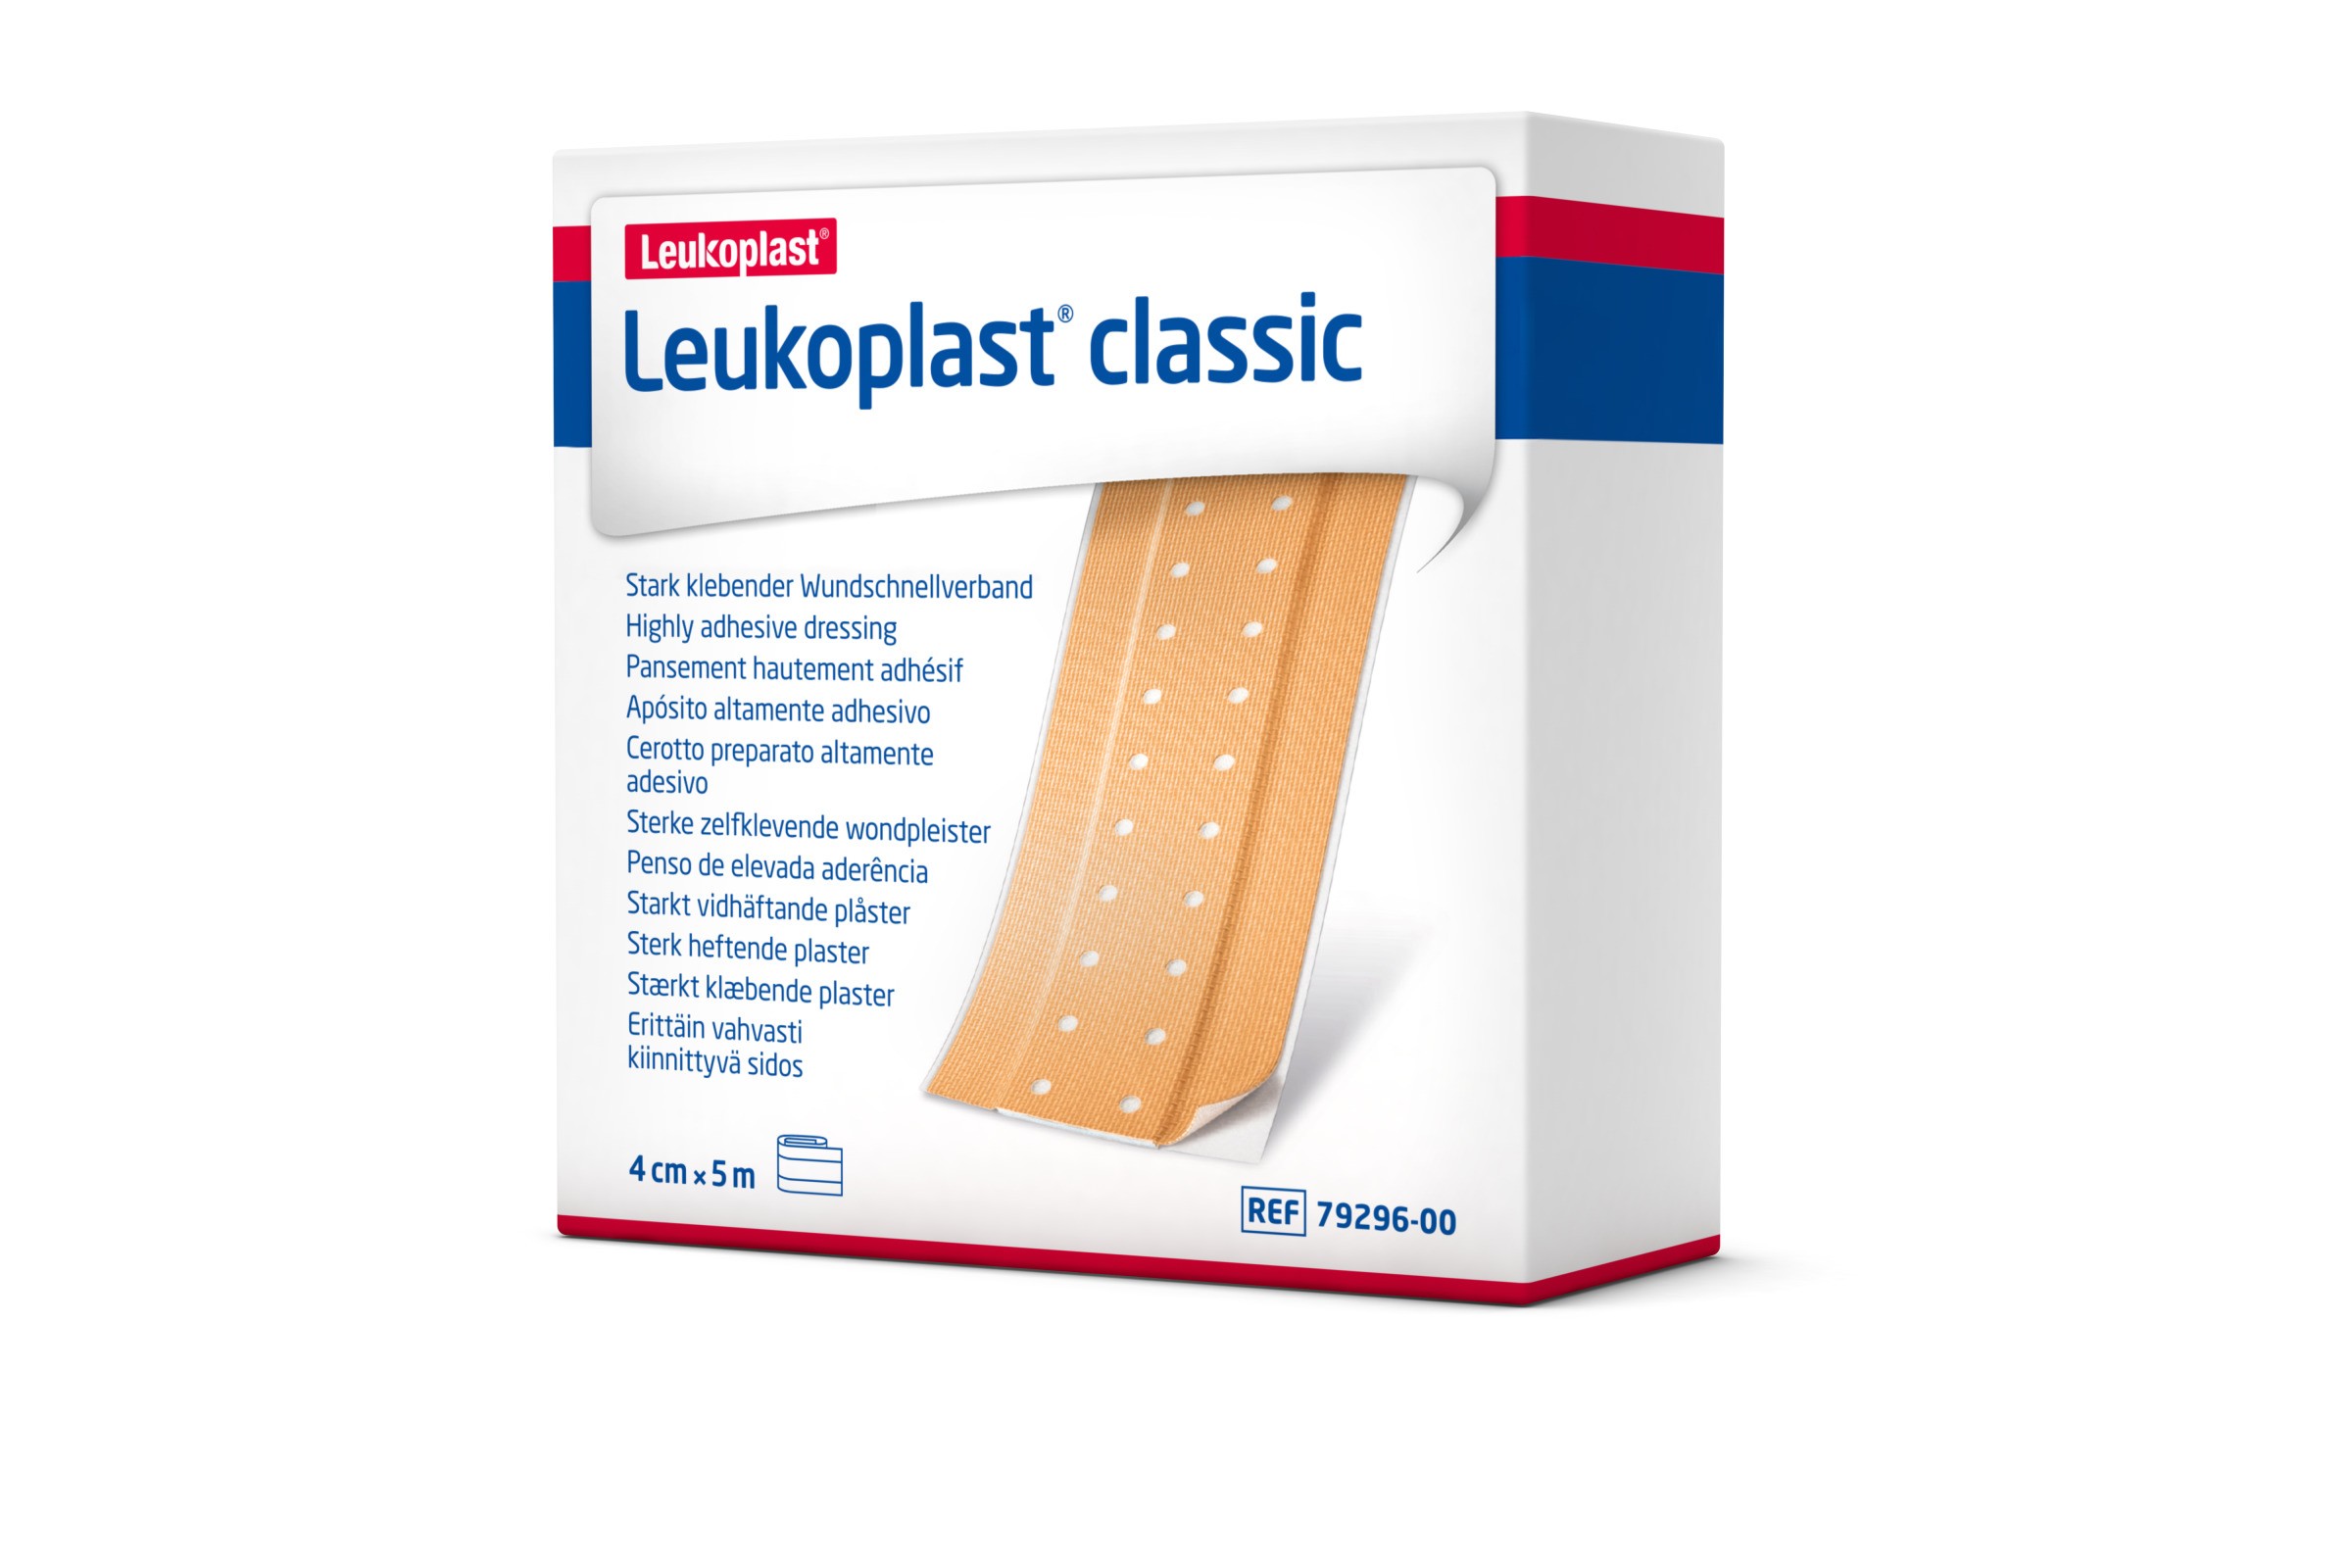 Leukoplast® classic Wundpflaster 5 m x 4 cm